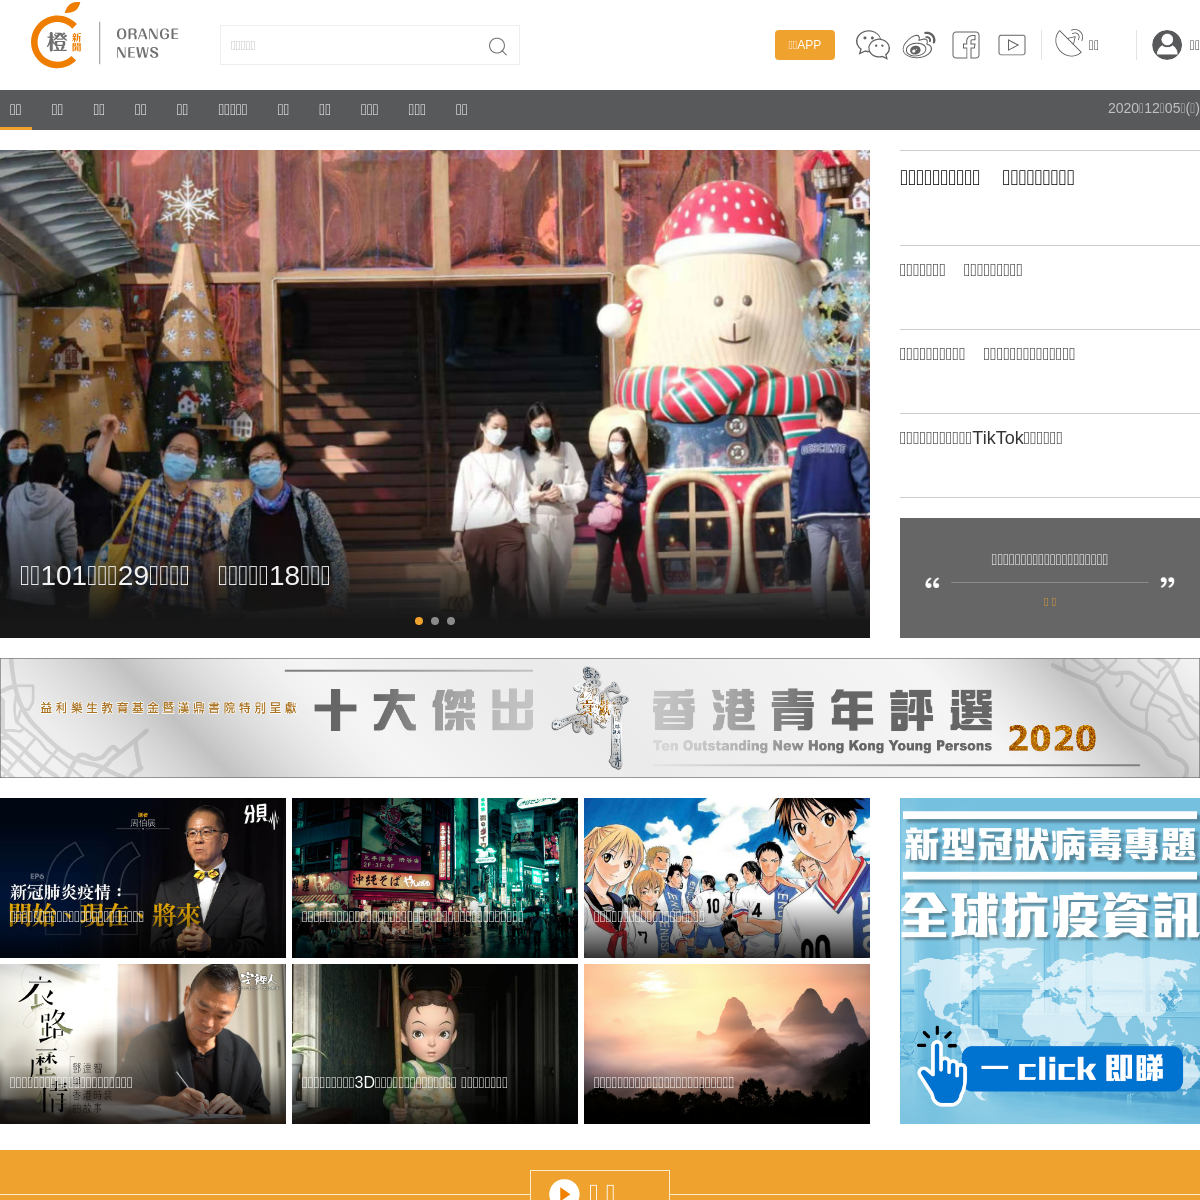 A complete backup of orangenews.hk